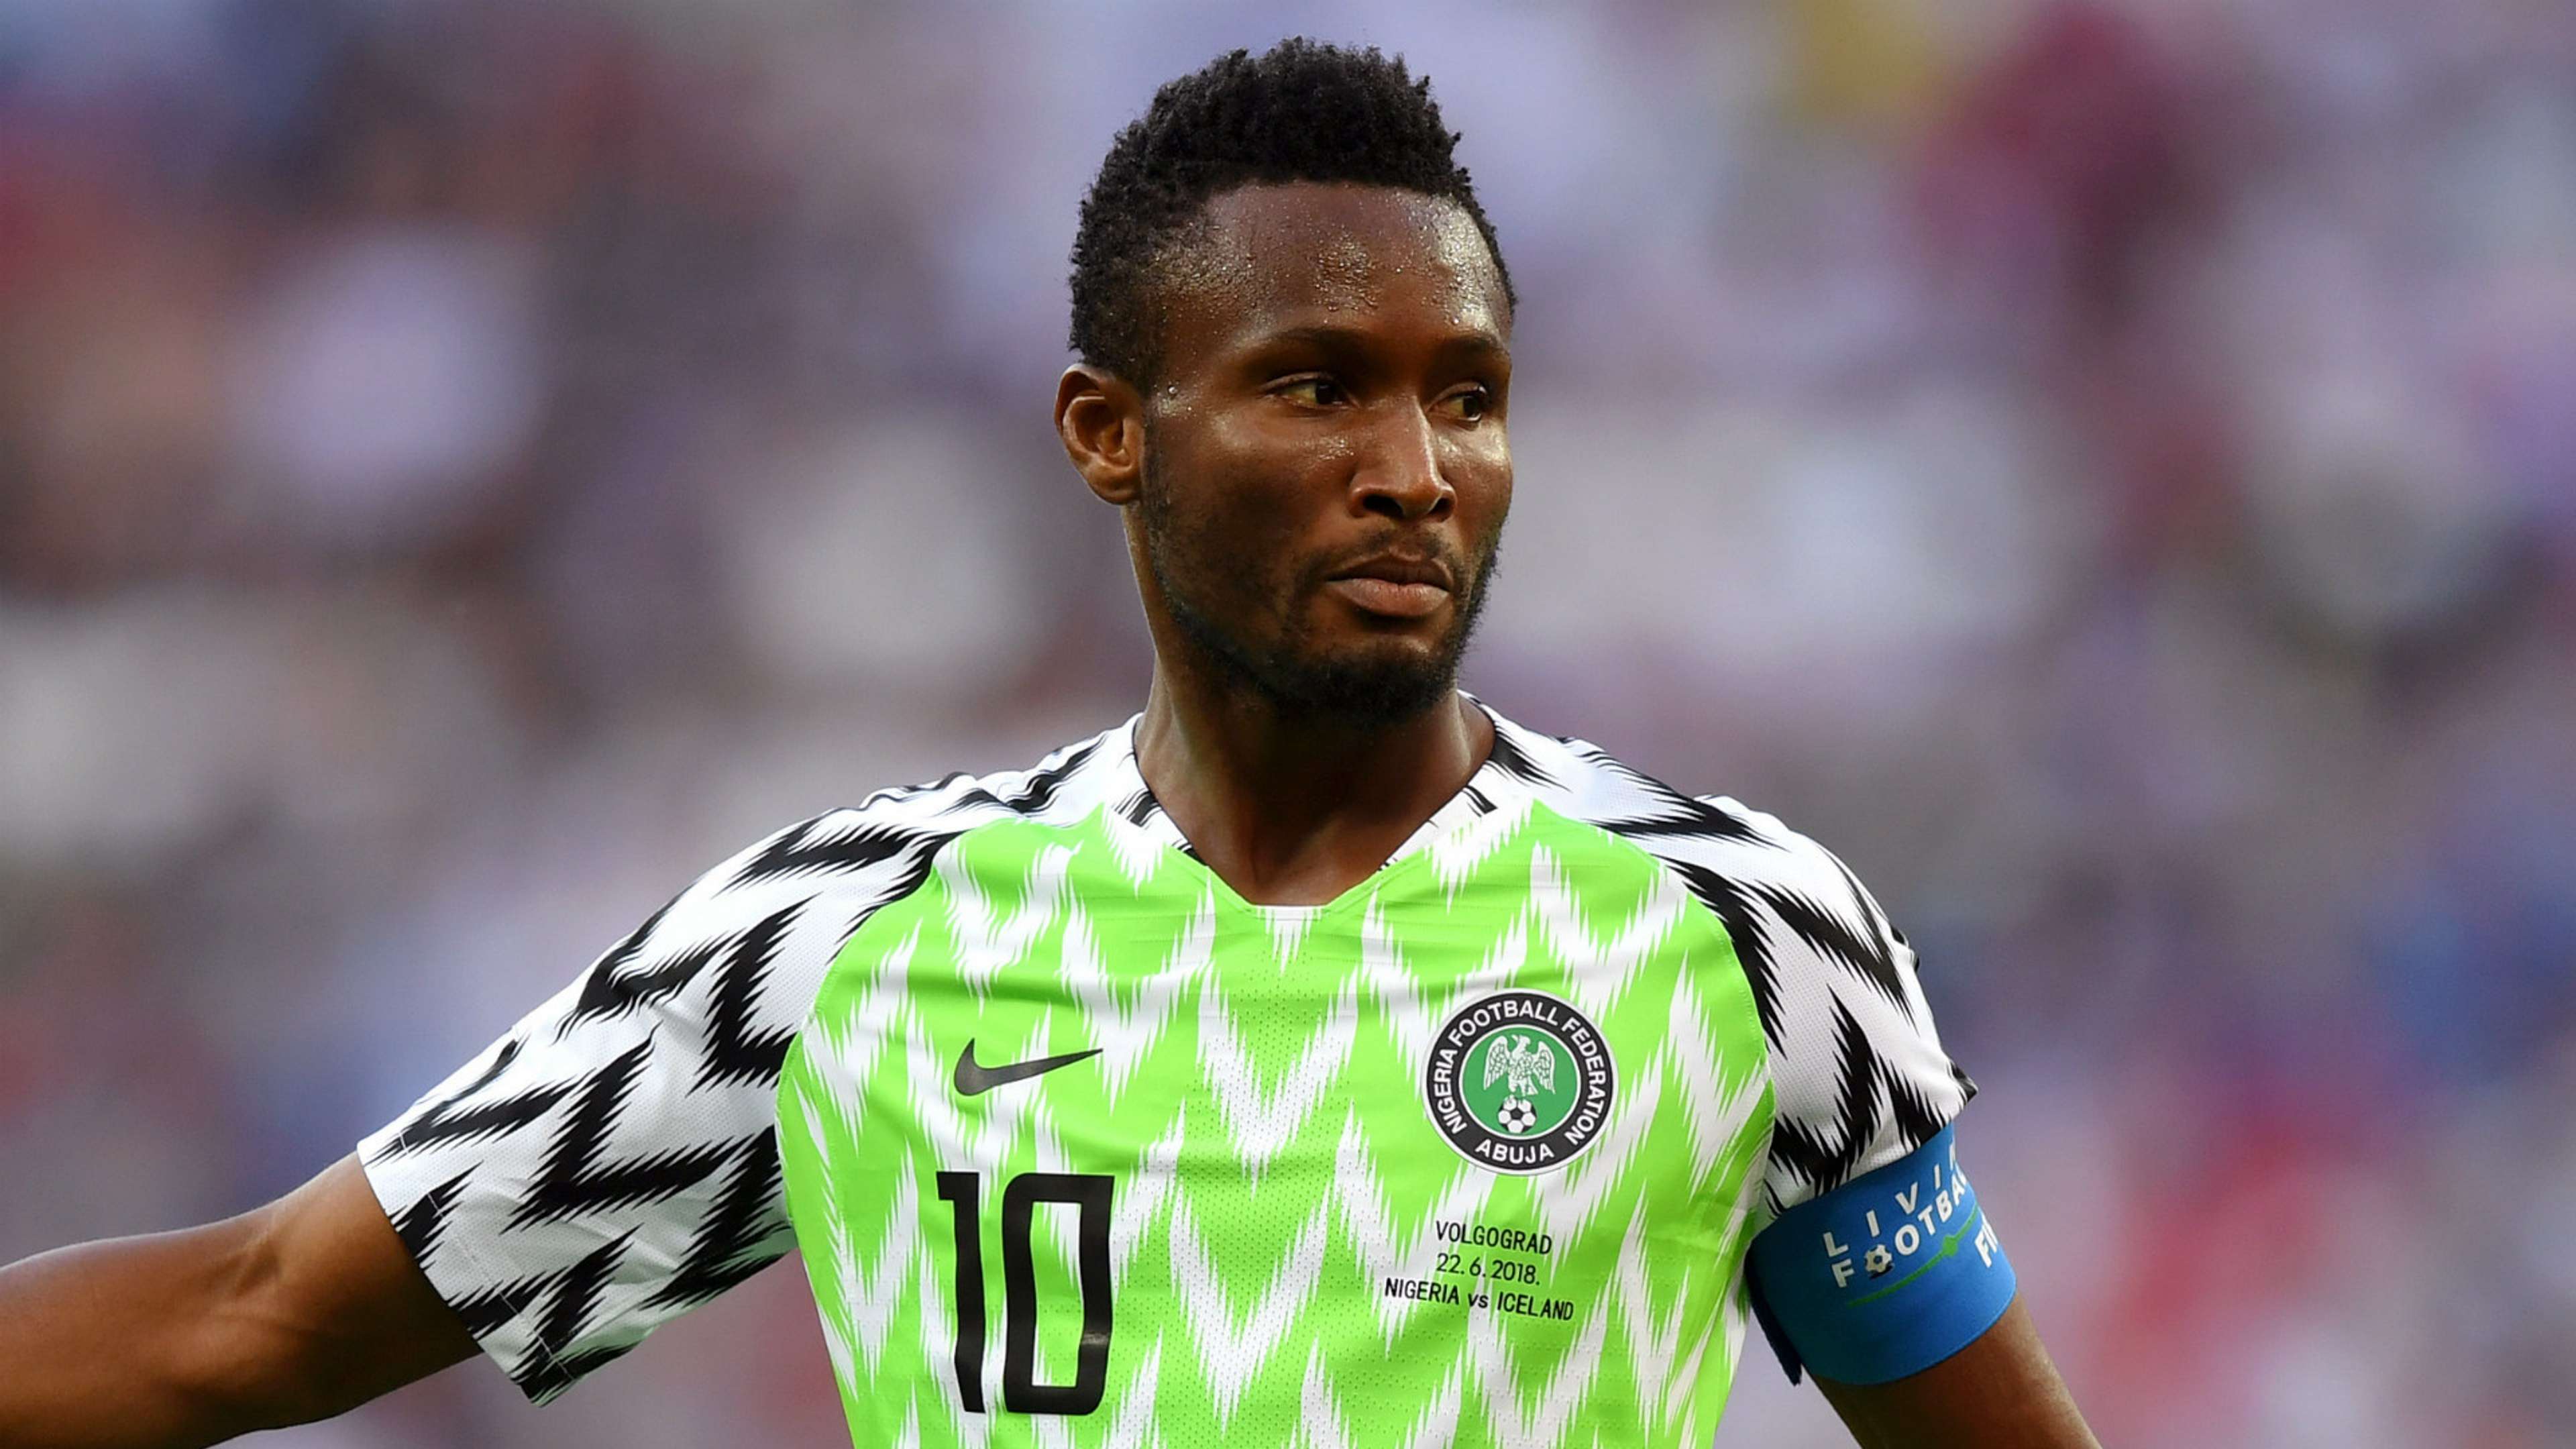 John Obi Mikel Nigeria 2018 World Cup